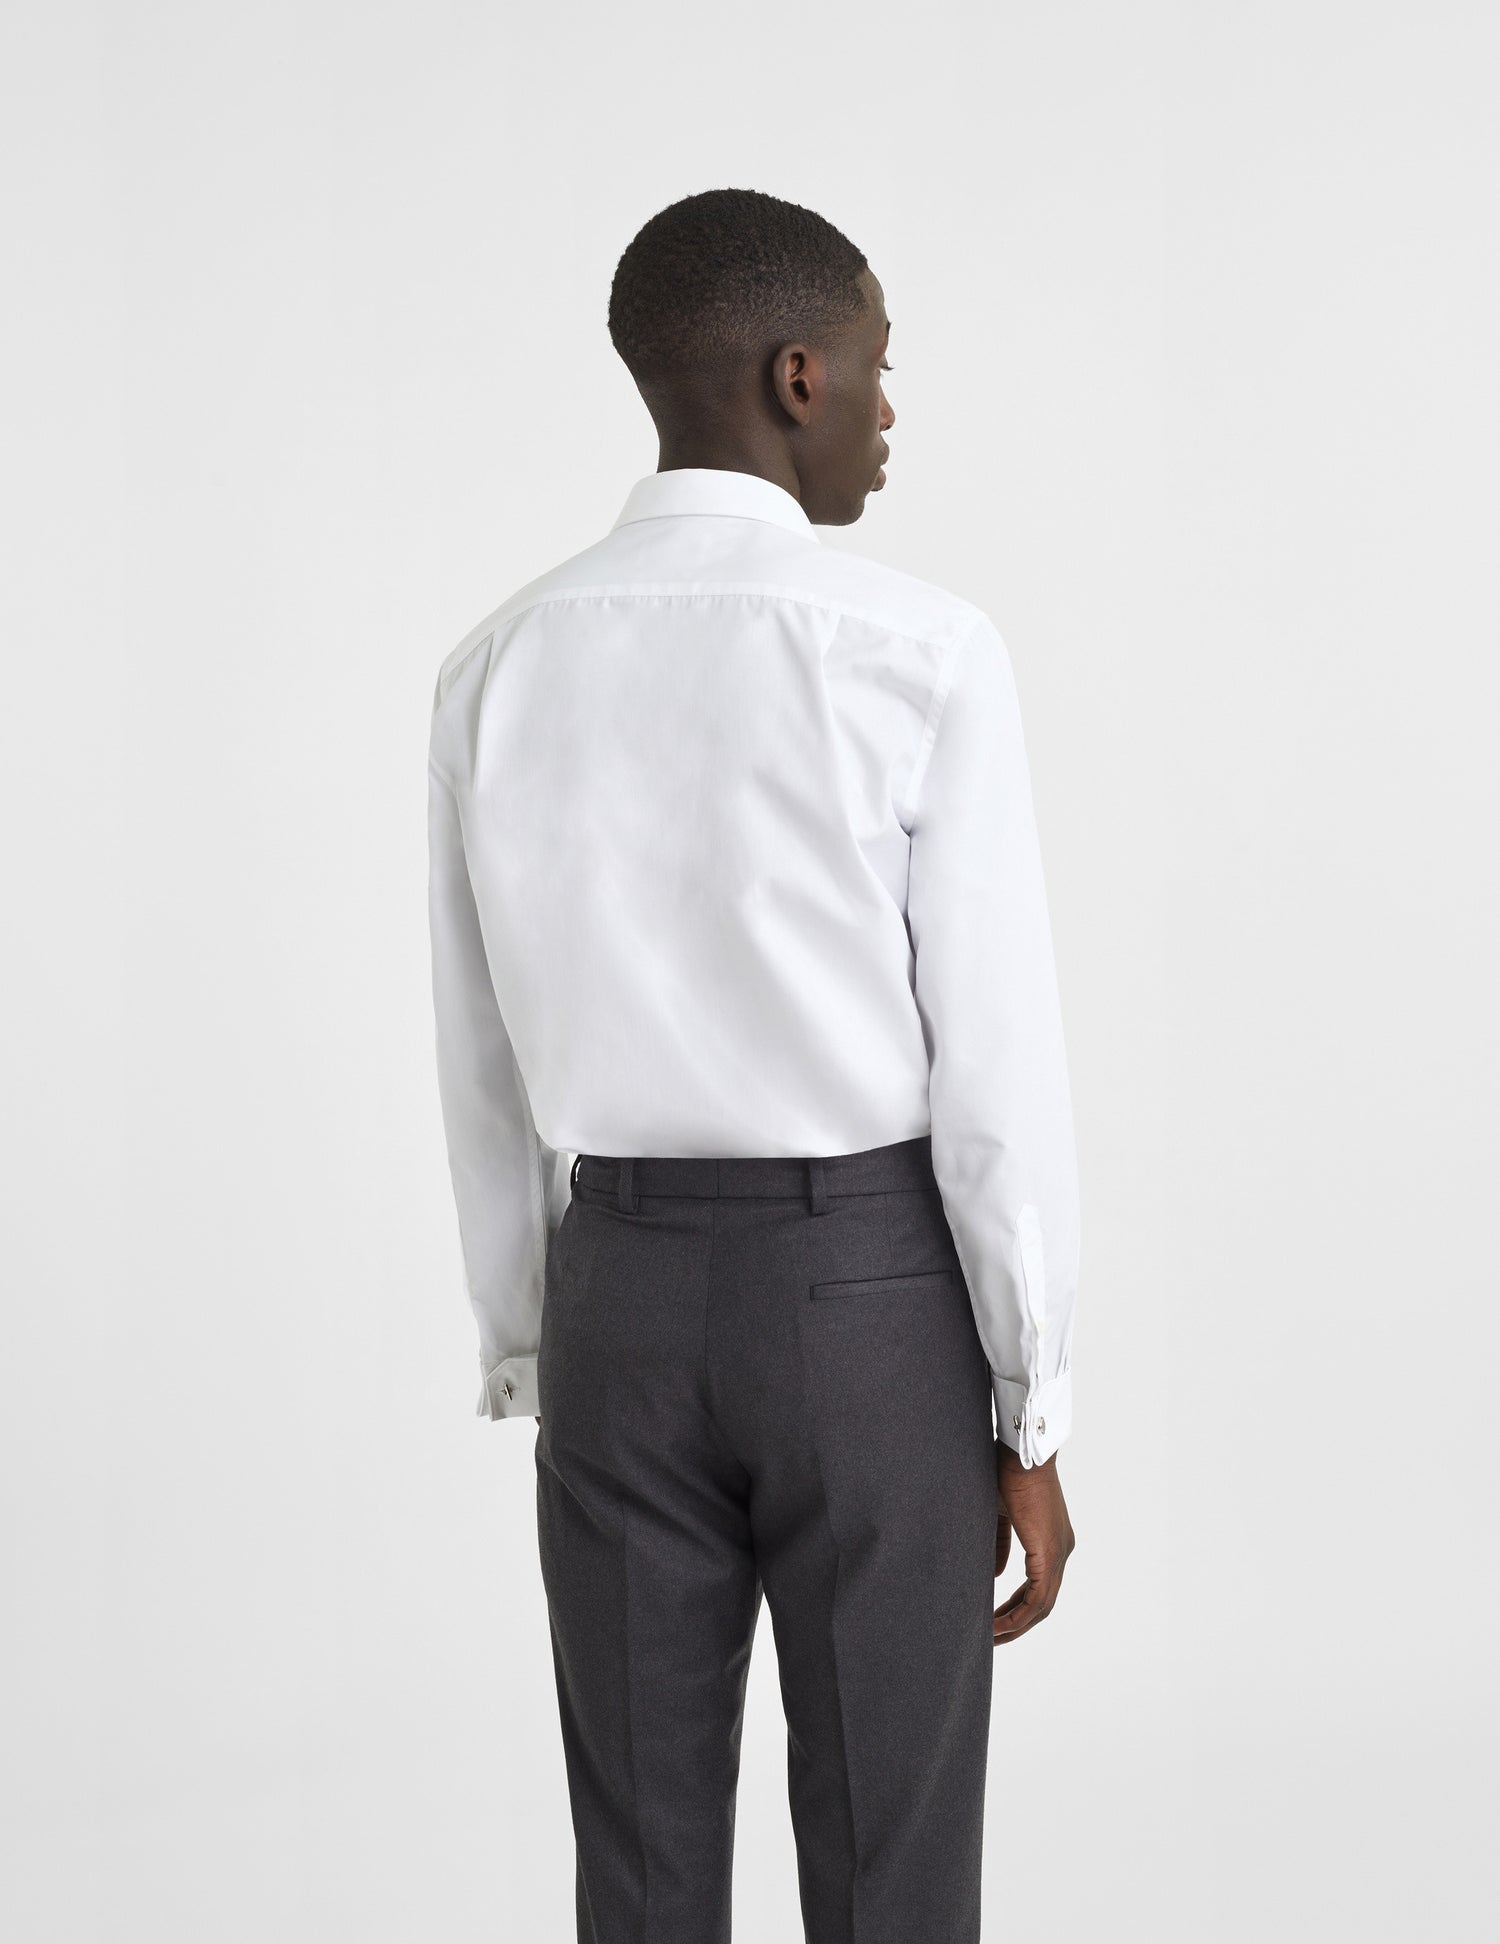 Classic white shirt - Poplin - Italian Collar - French Cuffs#4